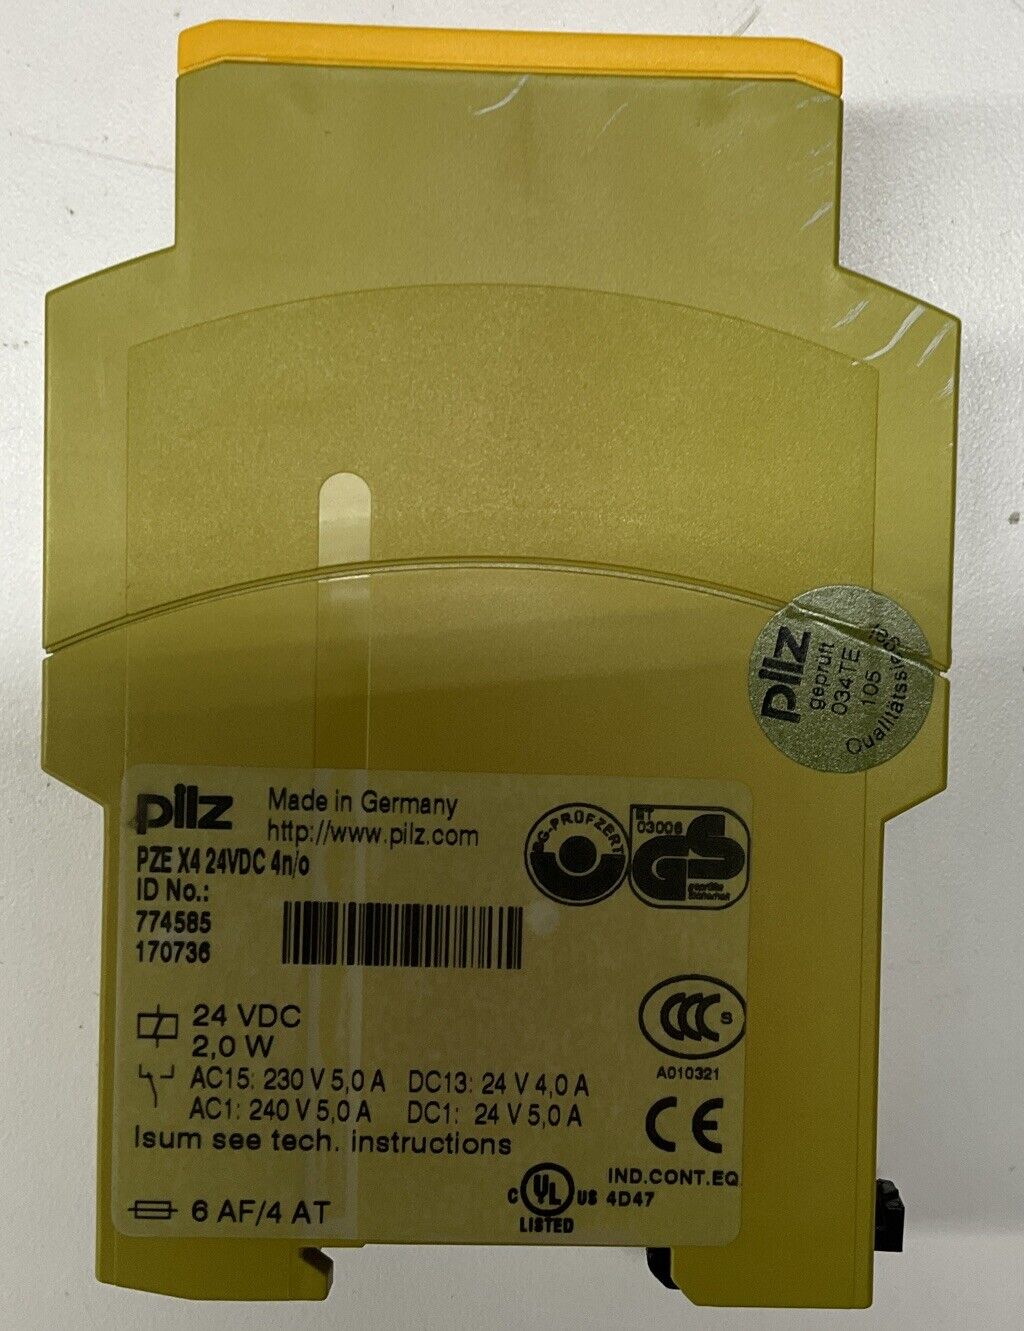 Pilz PZEX424VDC-4n/o / 774585 24VDC Safety Relay (CL165)